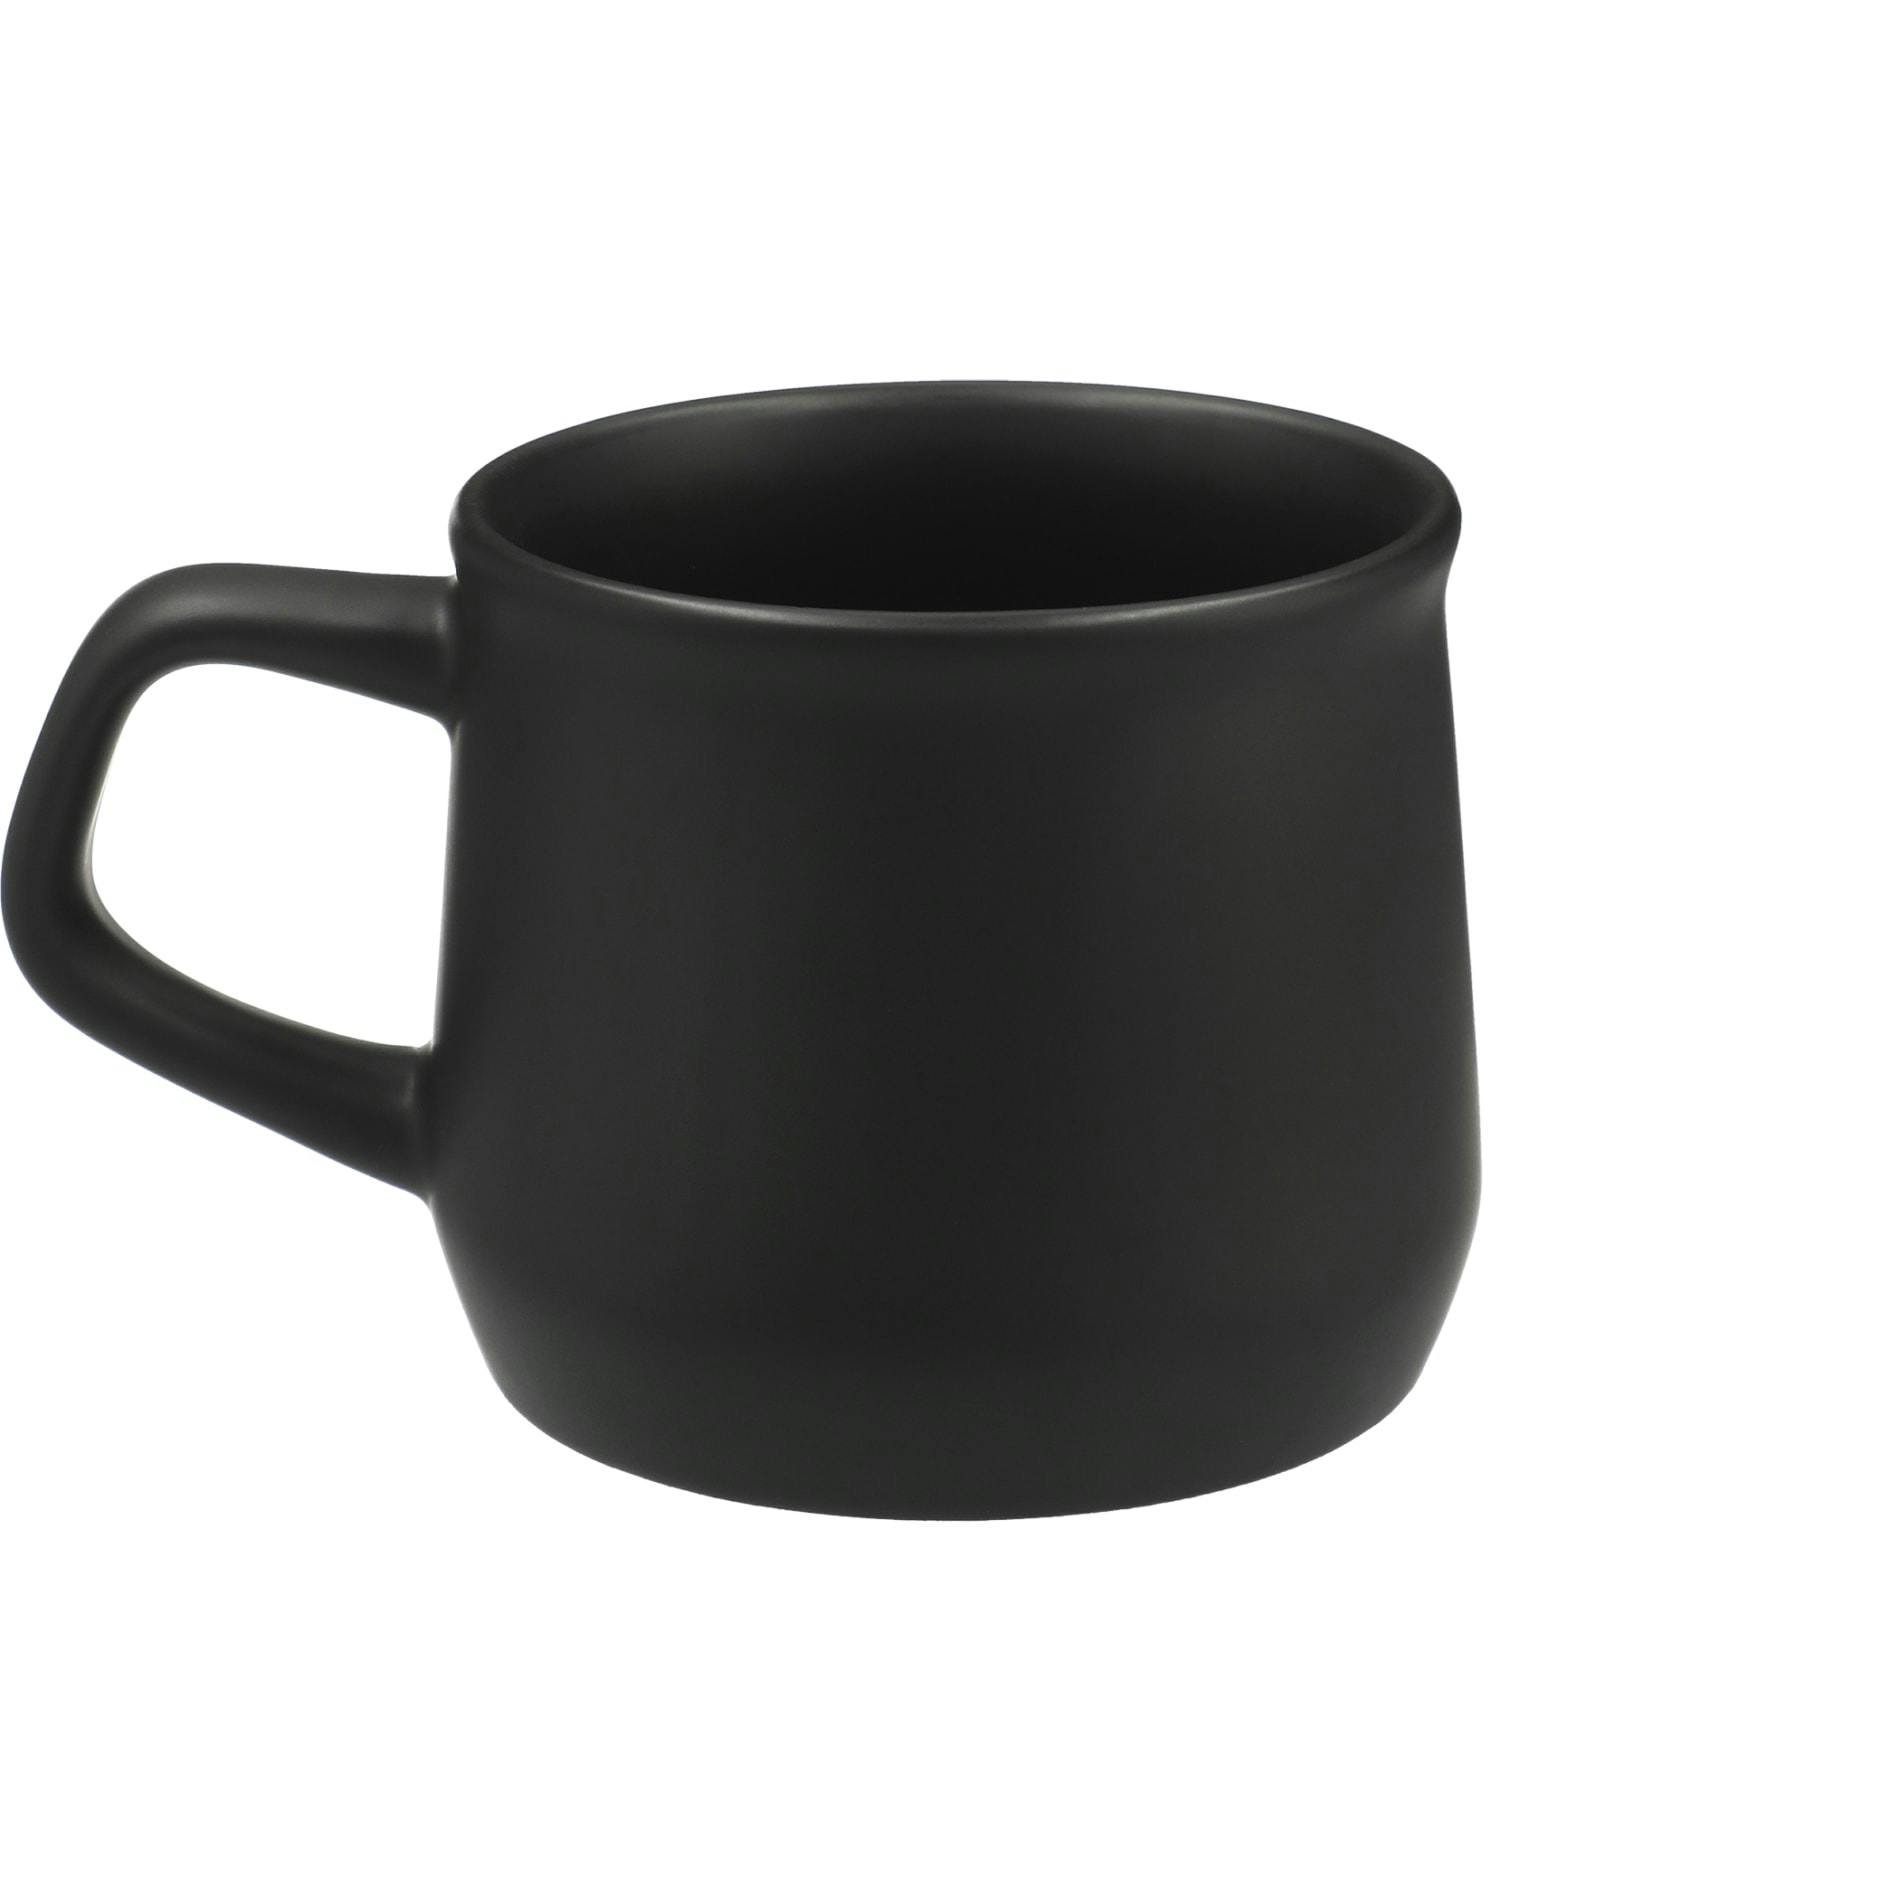 Angus 12oz Ceramic Mug - additional Image 3